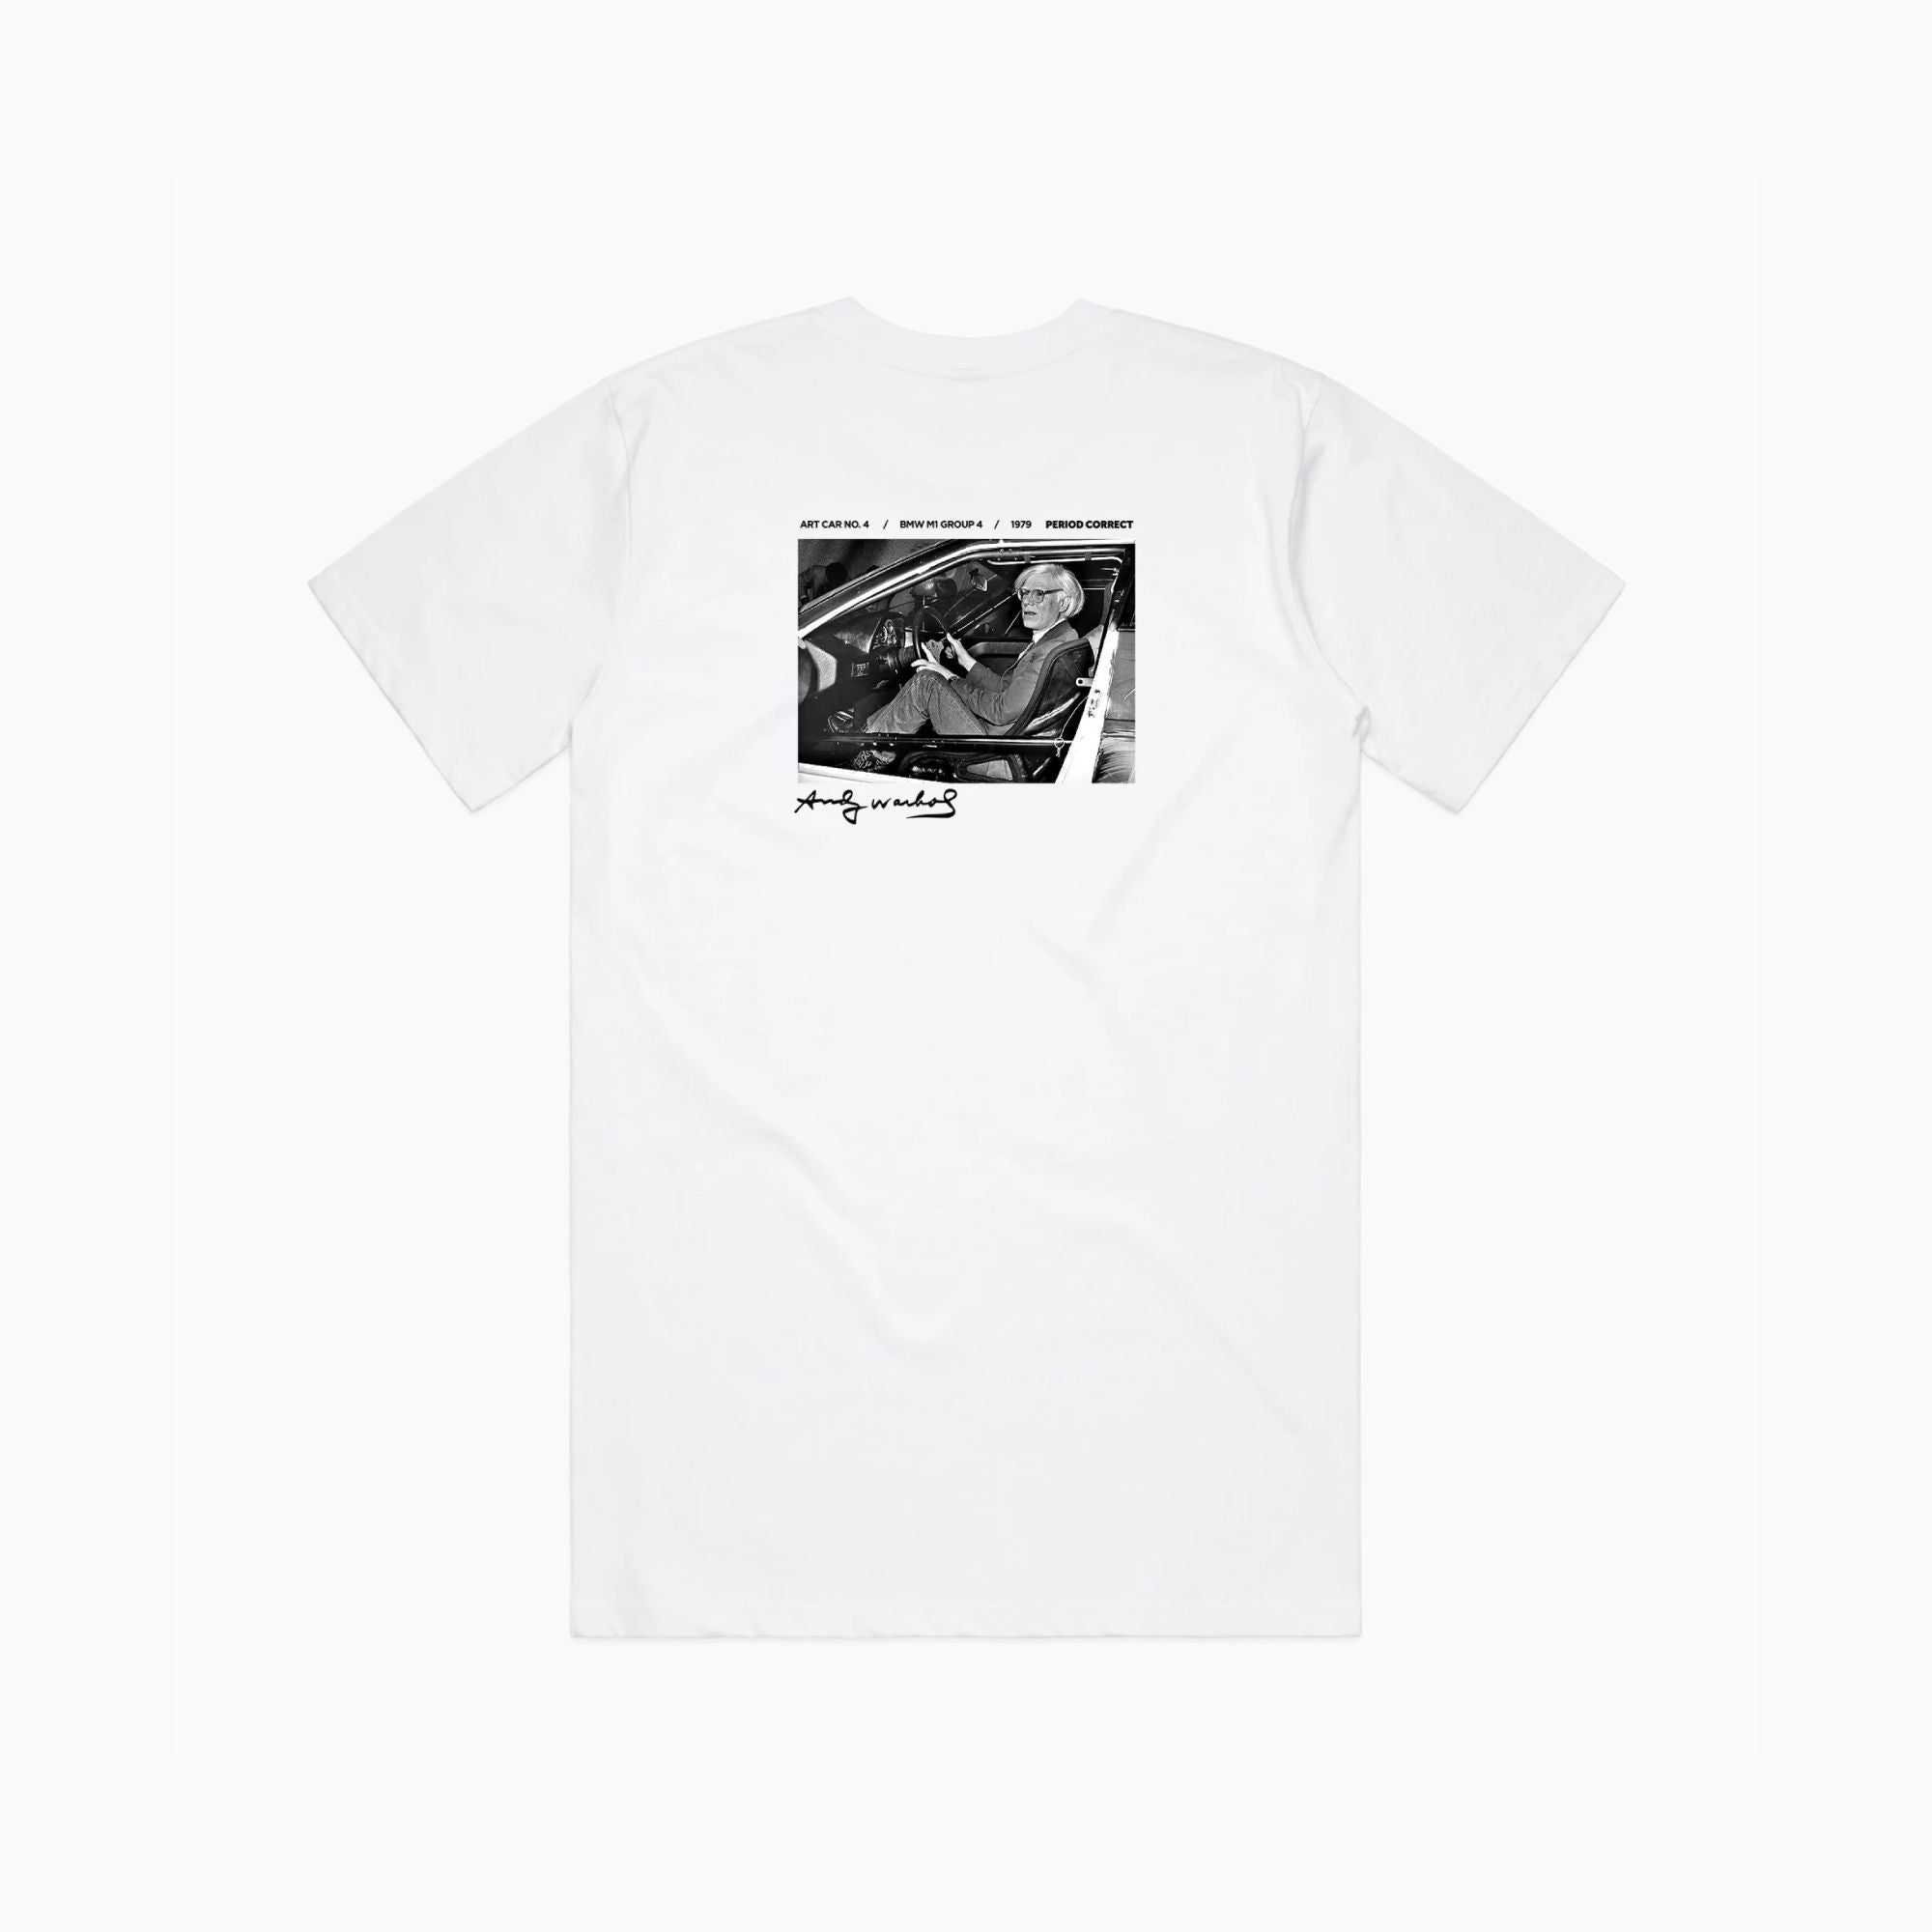 Period Correct | Warhol T-Shirt - White-T-Shirt-Period Correct-gpx-store